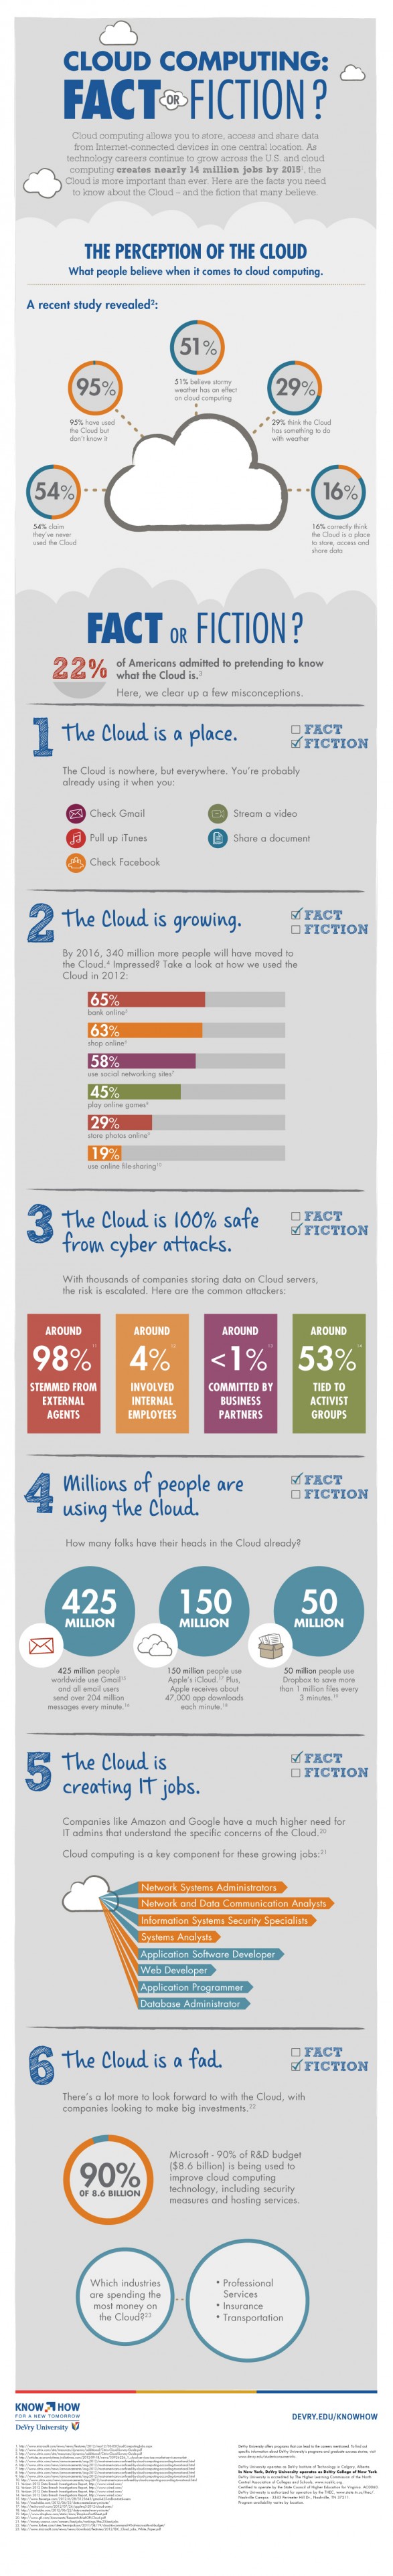 Cloud Computing - Fact or Fiction